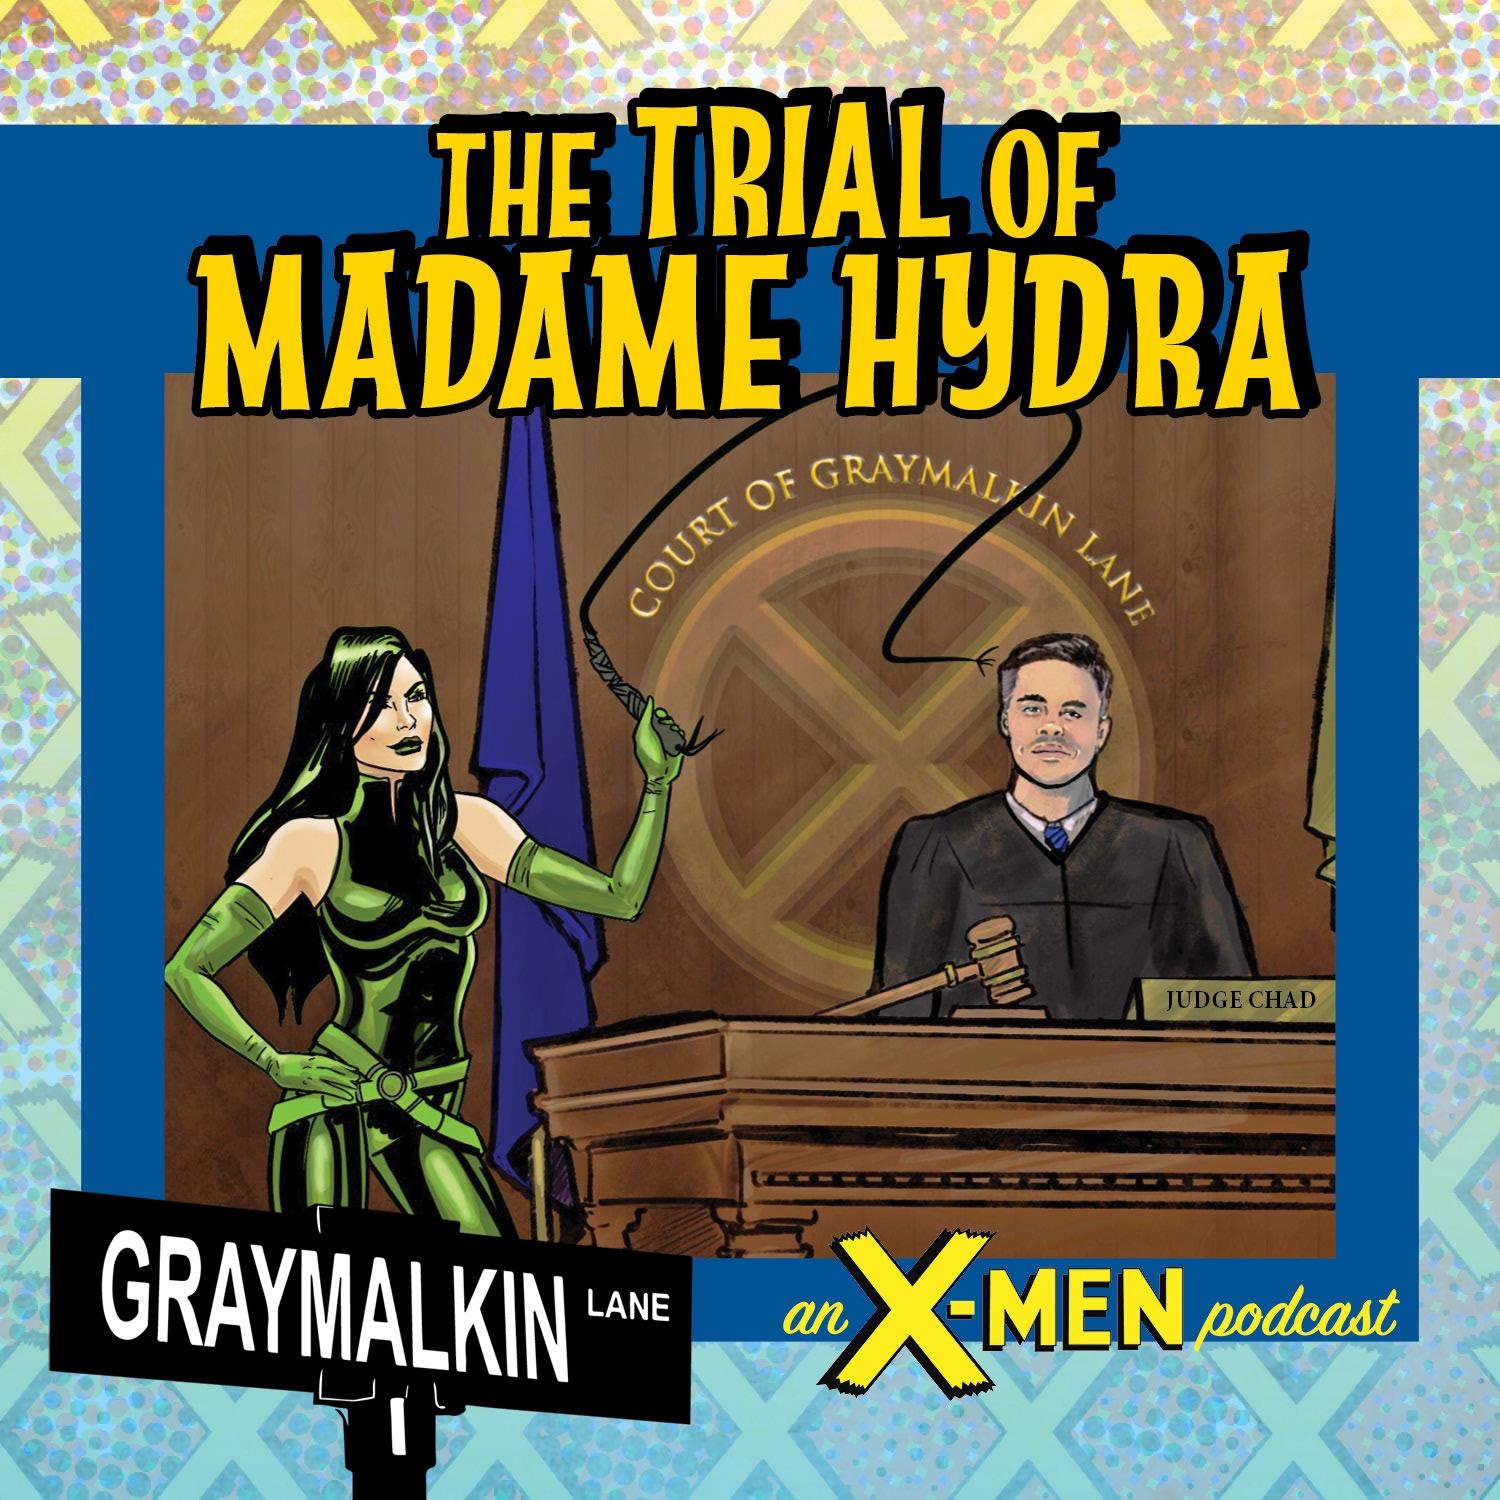 The Trial of Ophelia Sarkisian: Madame Hydra! Featuring Susan Kirtley, Noelle Reed, Isabel Dieppa, Steve Duda, and Hussein Rashid!